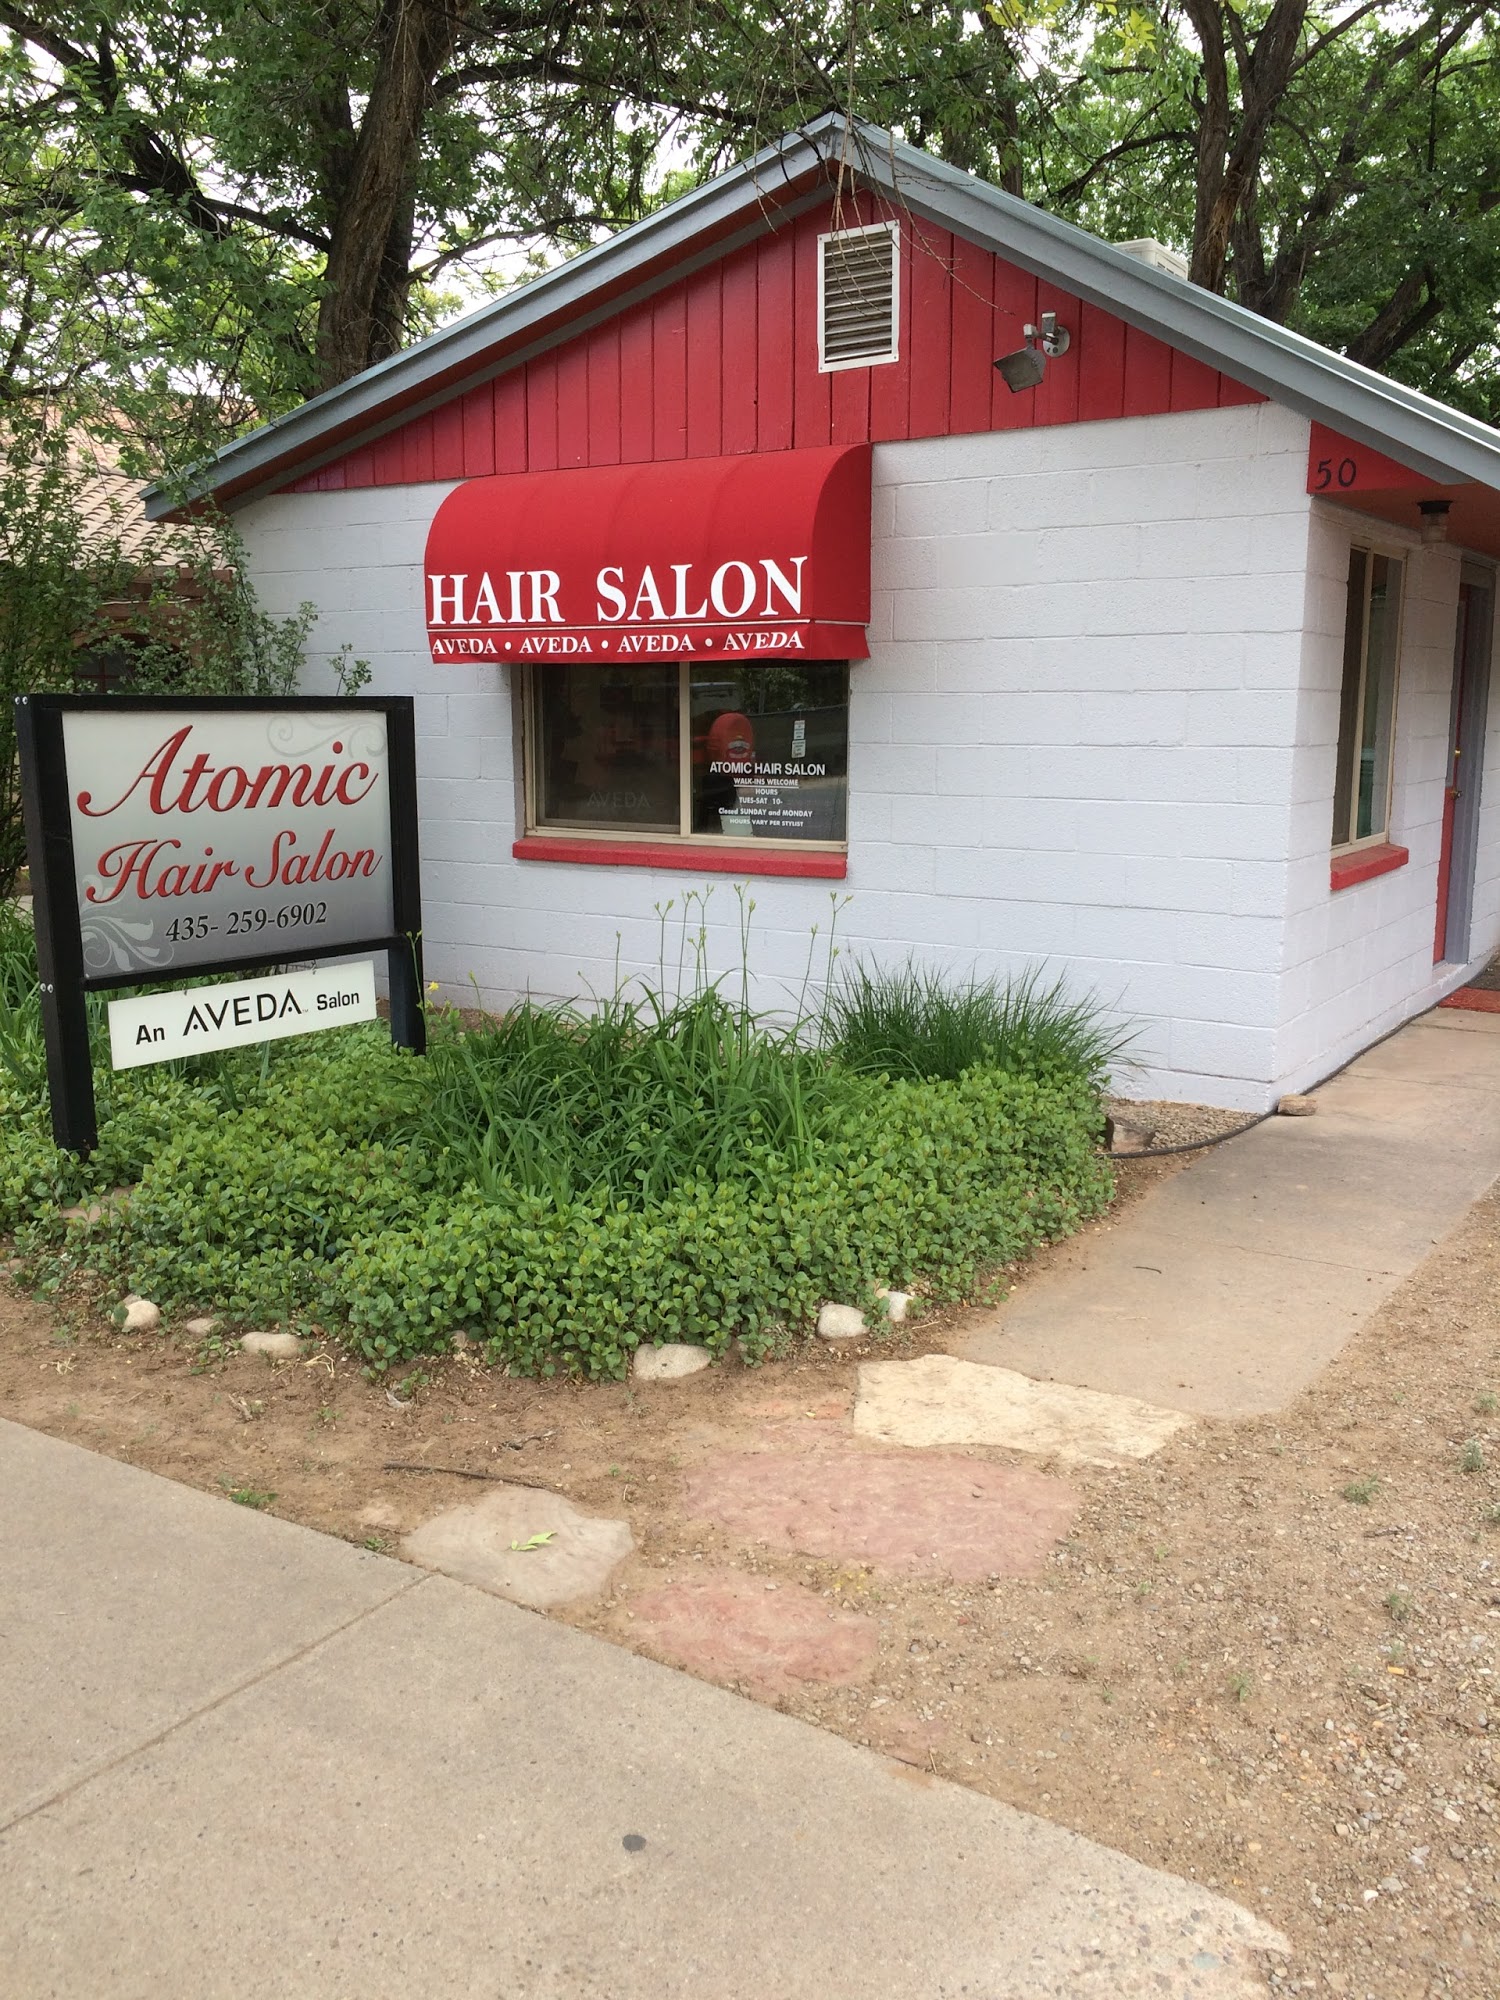 Atomic Hair Salon